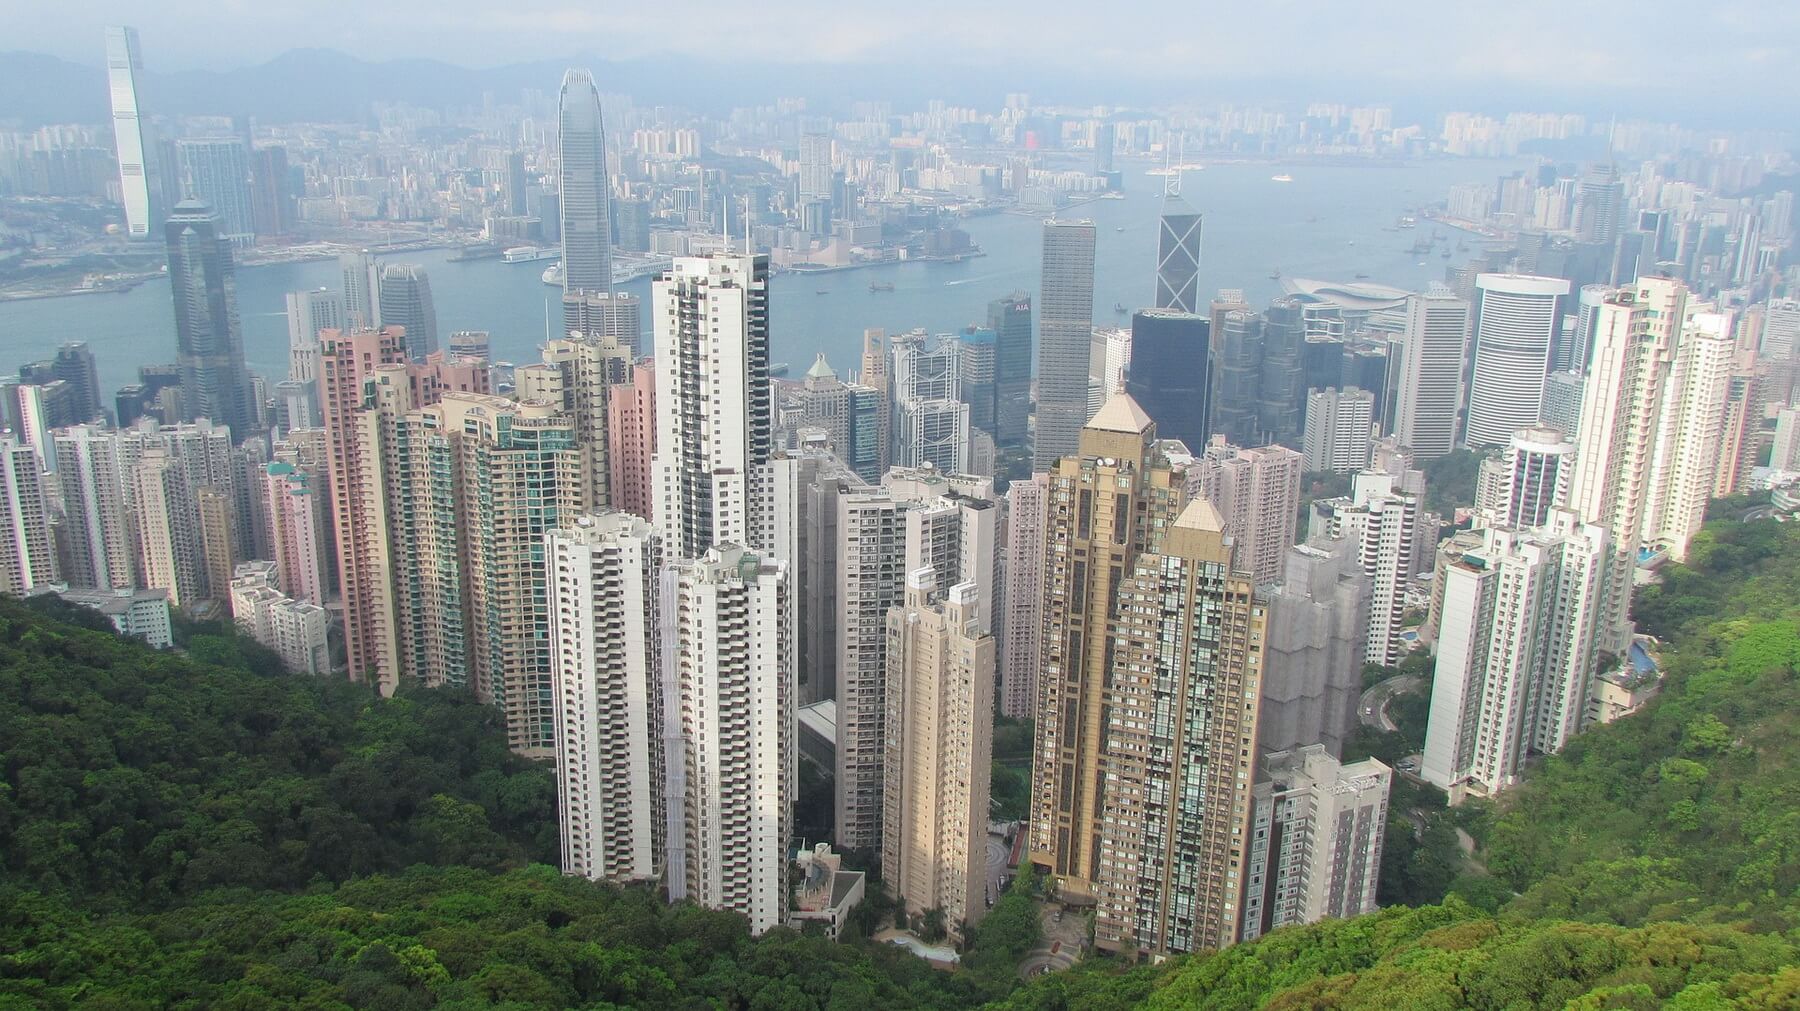 Die Skyline von Hongkong streng nach Feng Shui ausgerichtet